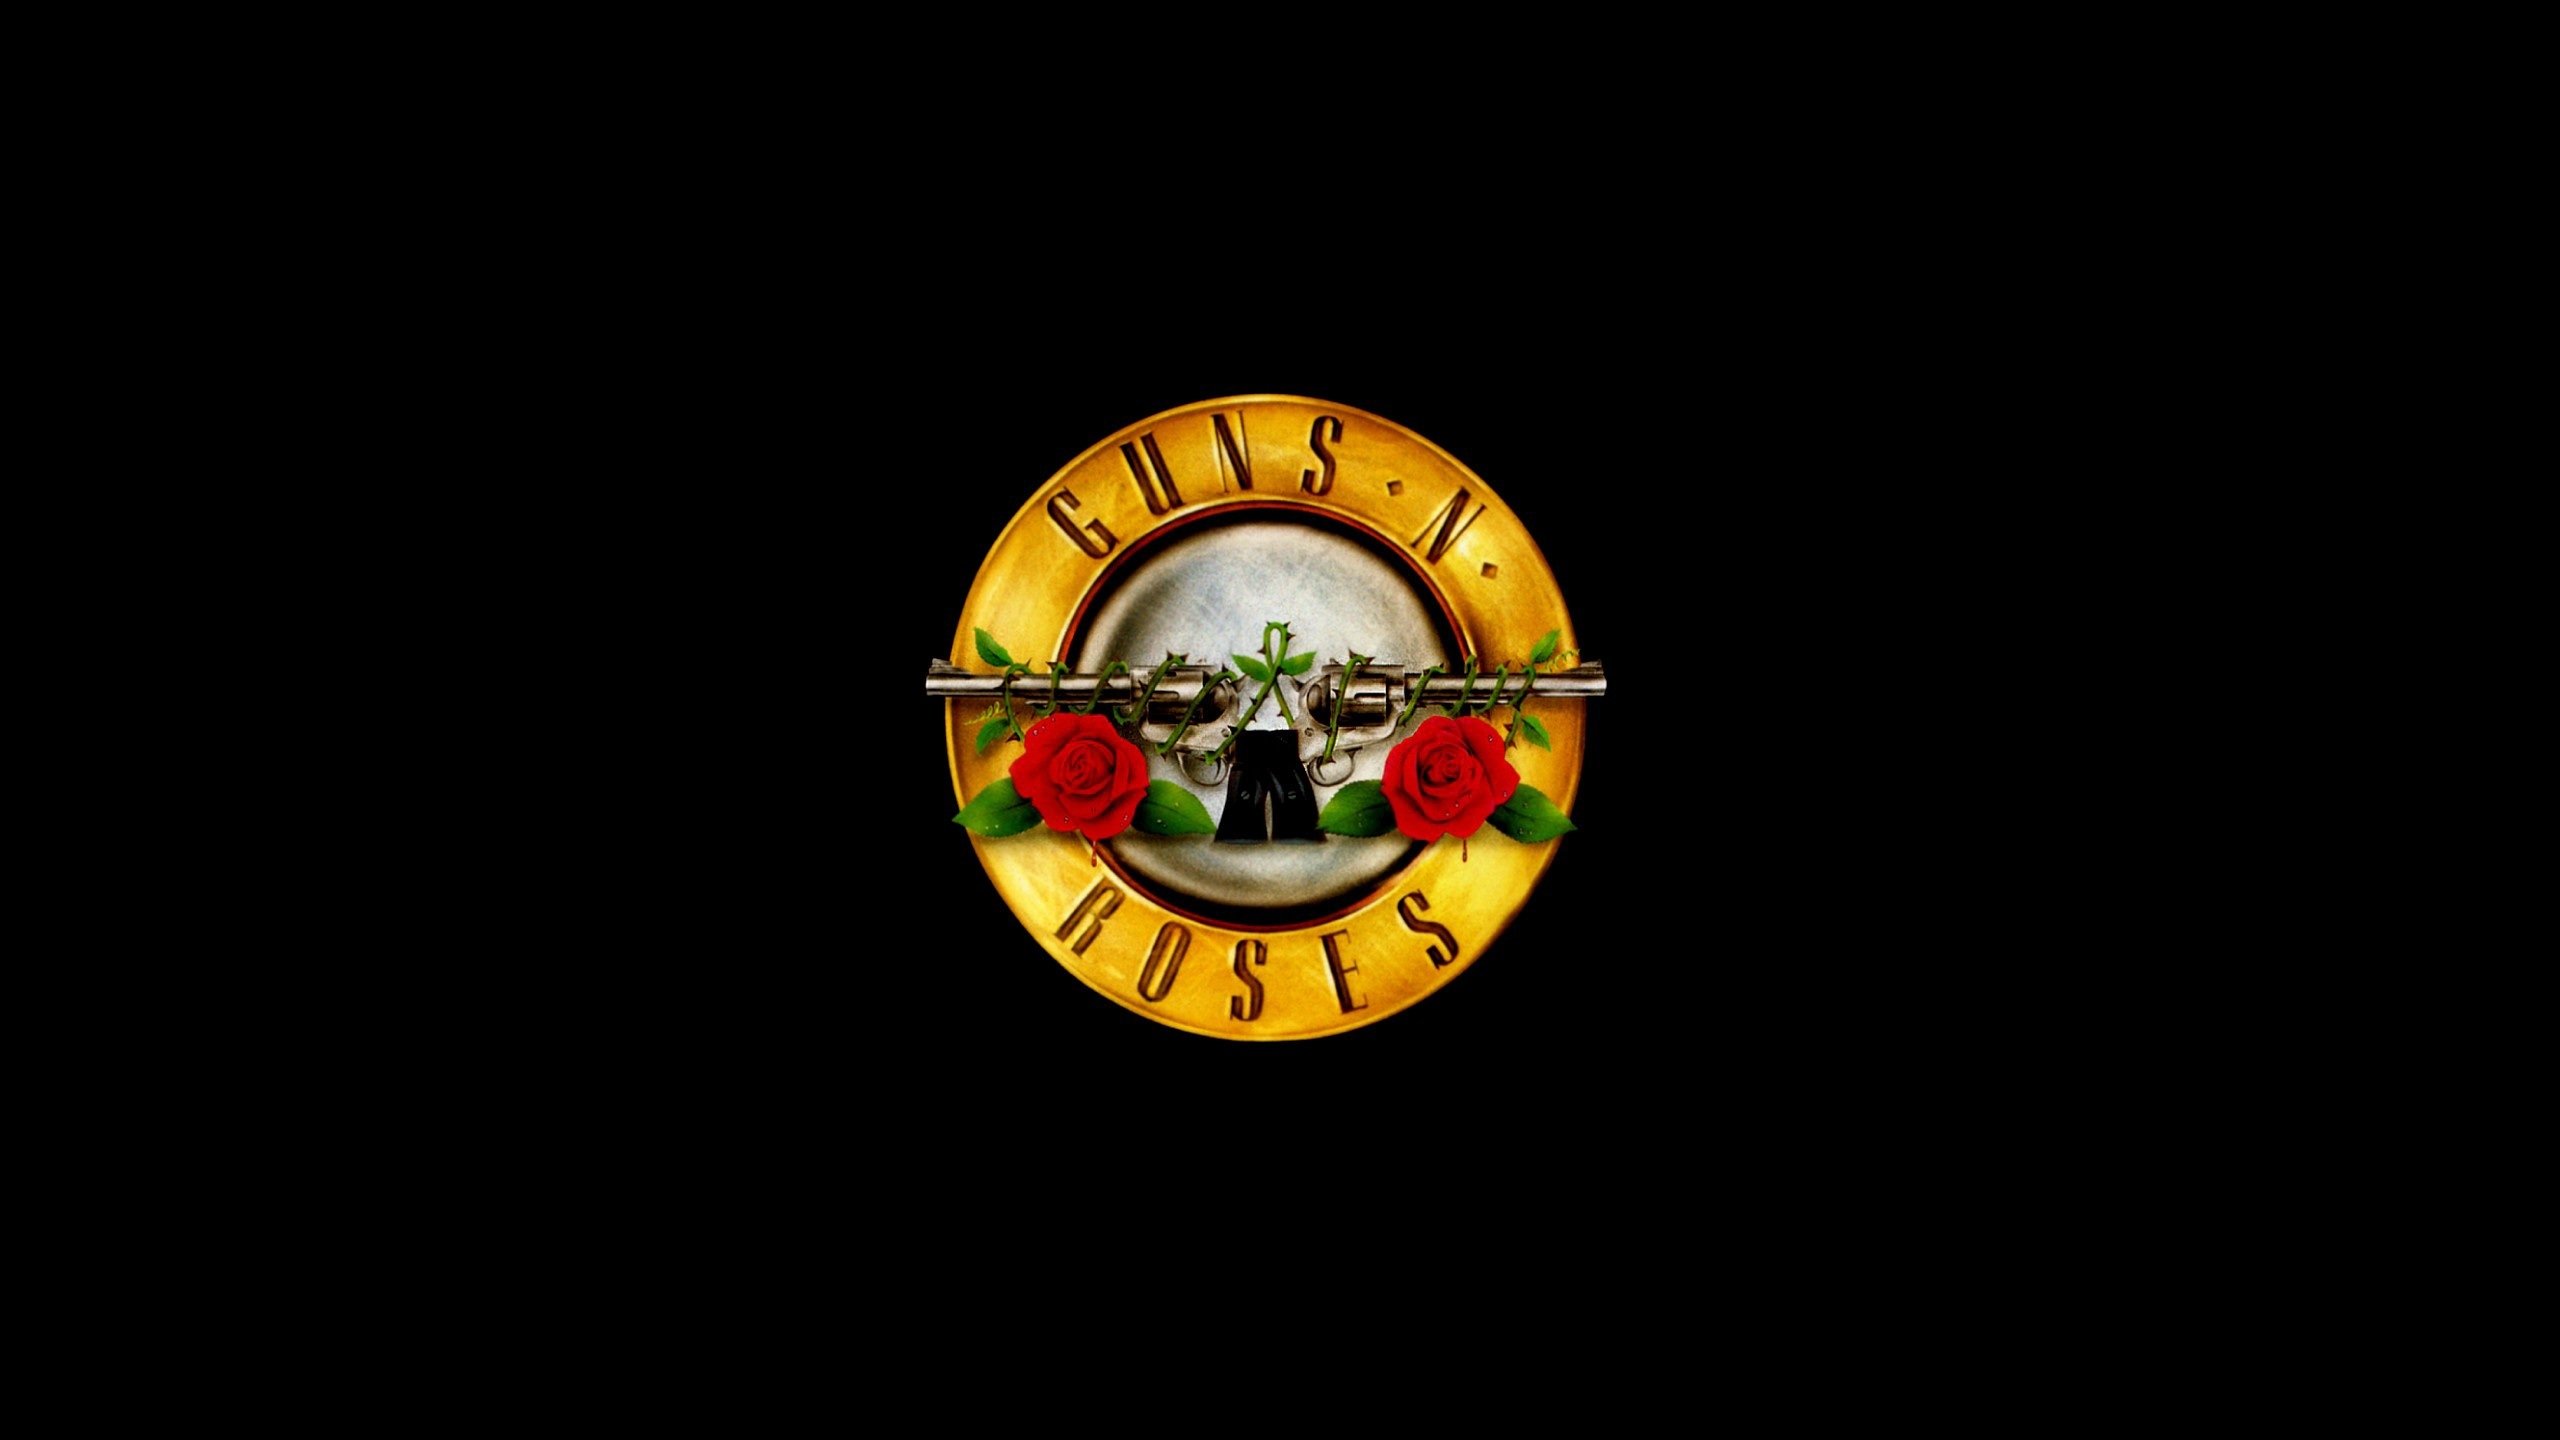 High resolution Guns N' Roses hd 2560x1440 wallpaper ID:256844 for desktop